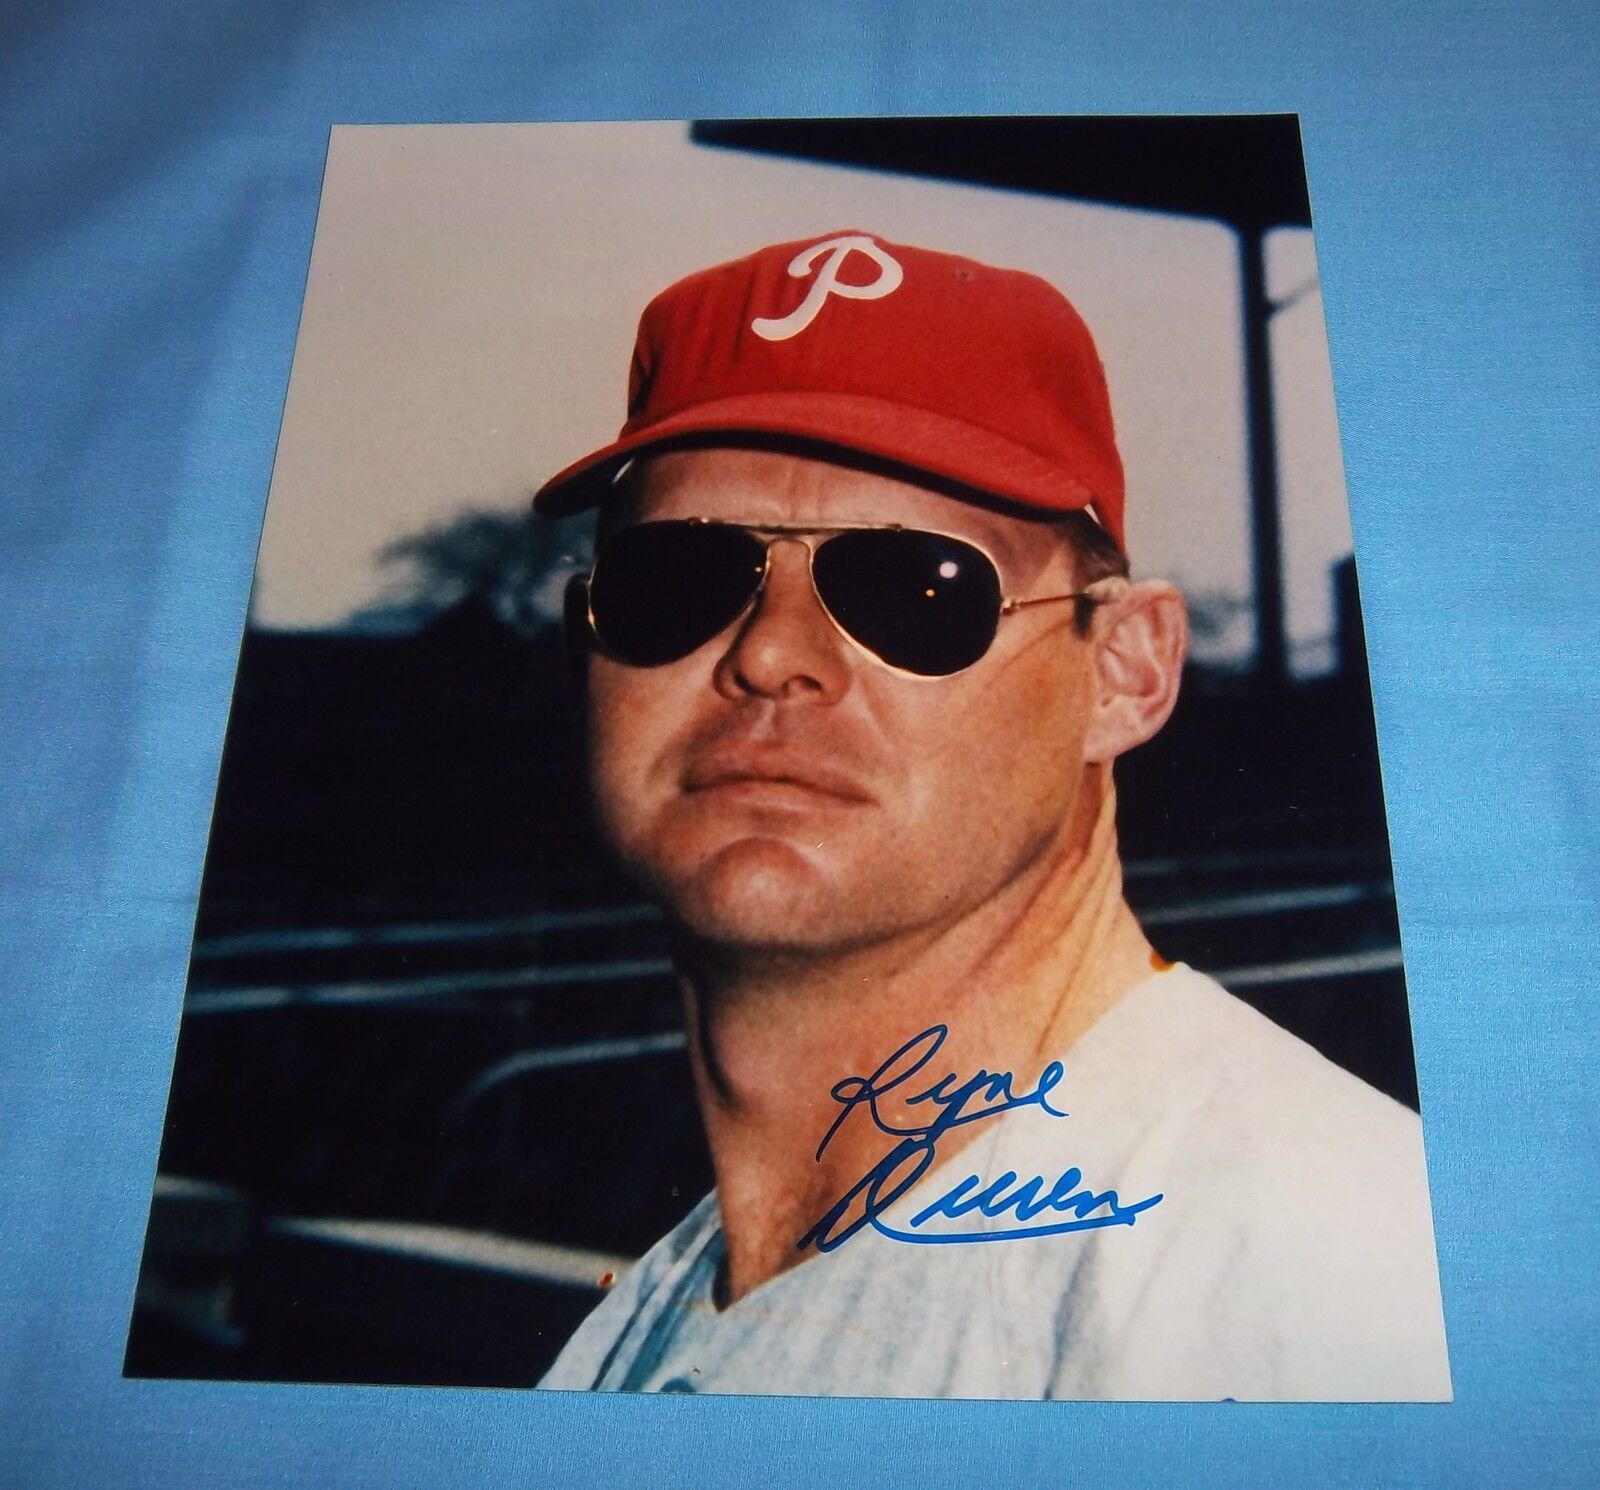 Philadelphia Phillies Ryne Duren Signed Autographed 8x10 Photo Poster painting NY Yankees